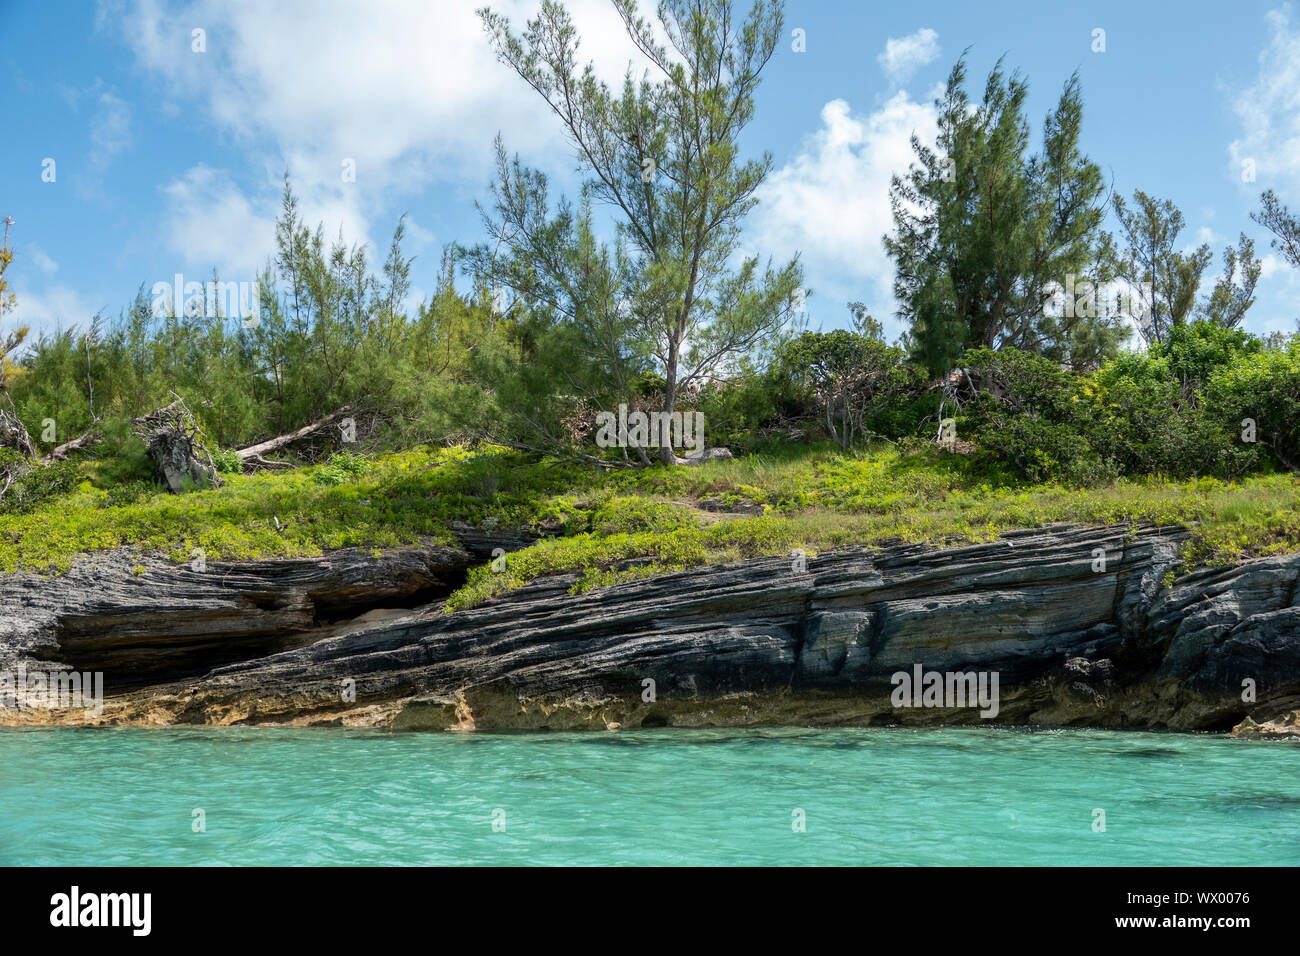 Coastal rock formations on the island of Bermuda Stock Photo